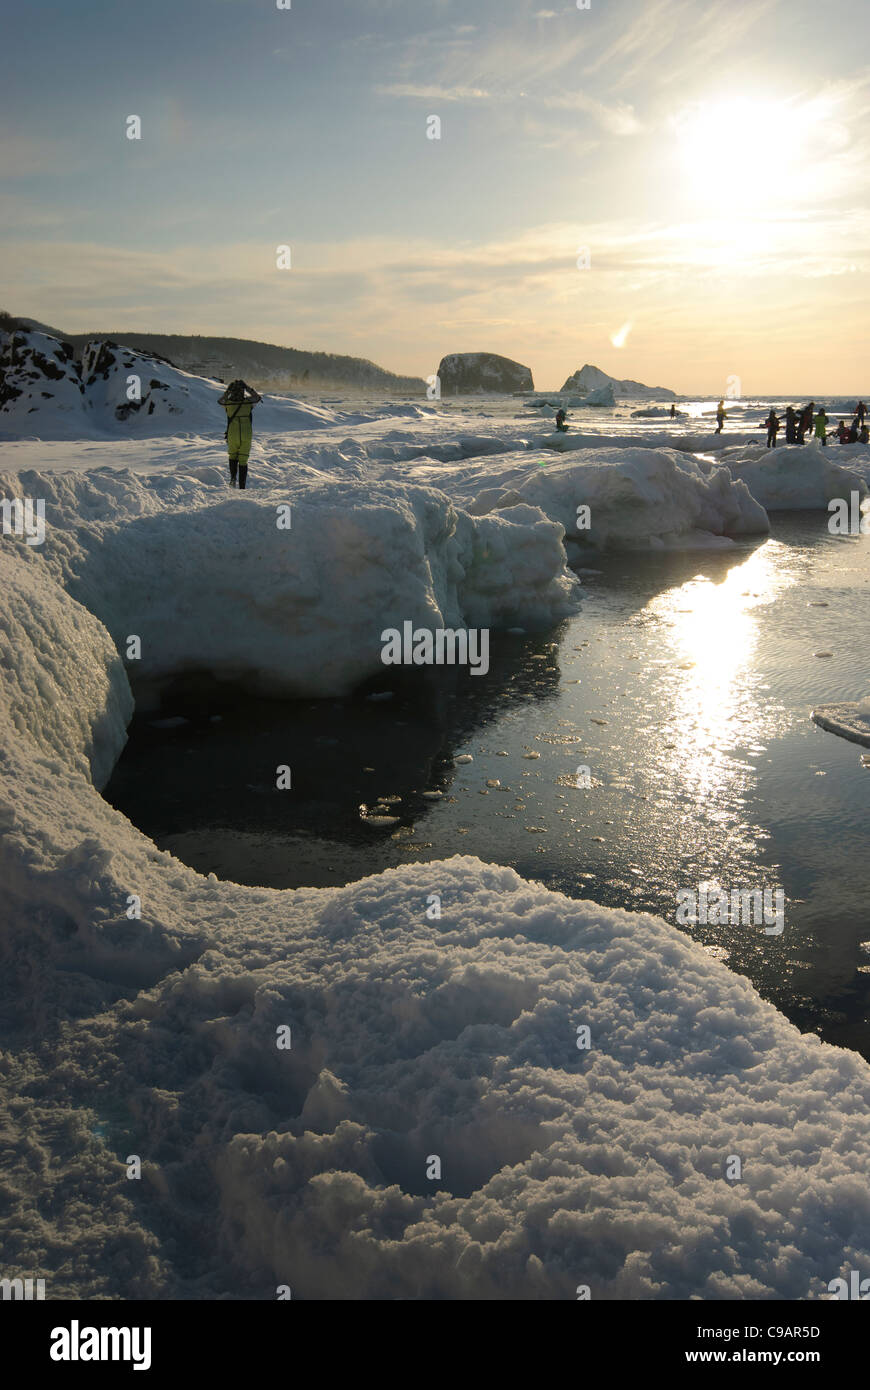 Tourists exploring frozen coastline, Shiretoko and Nemuro, Hokkaido, Japan Stock Photo